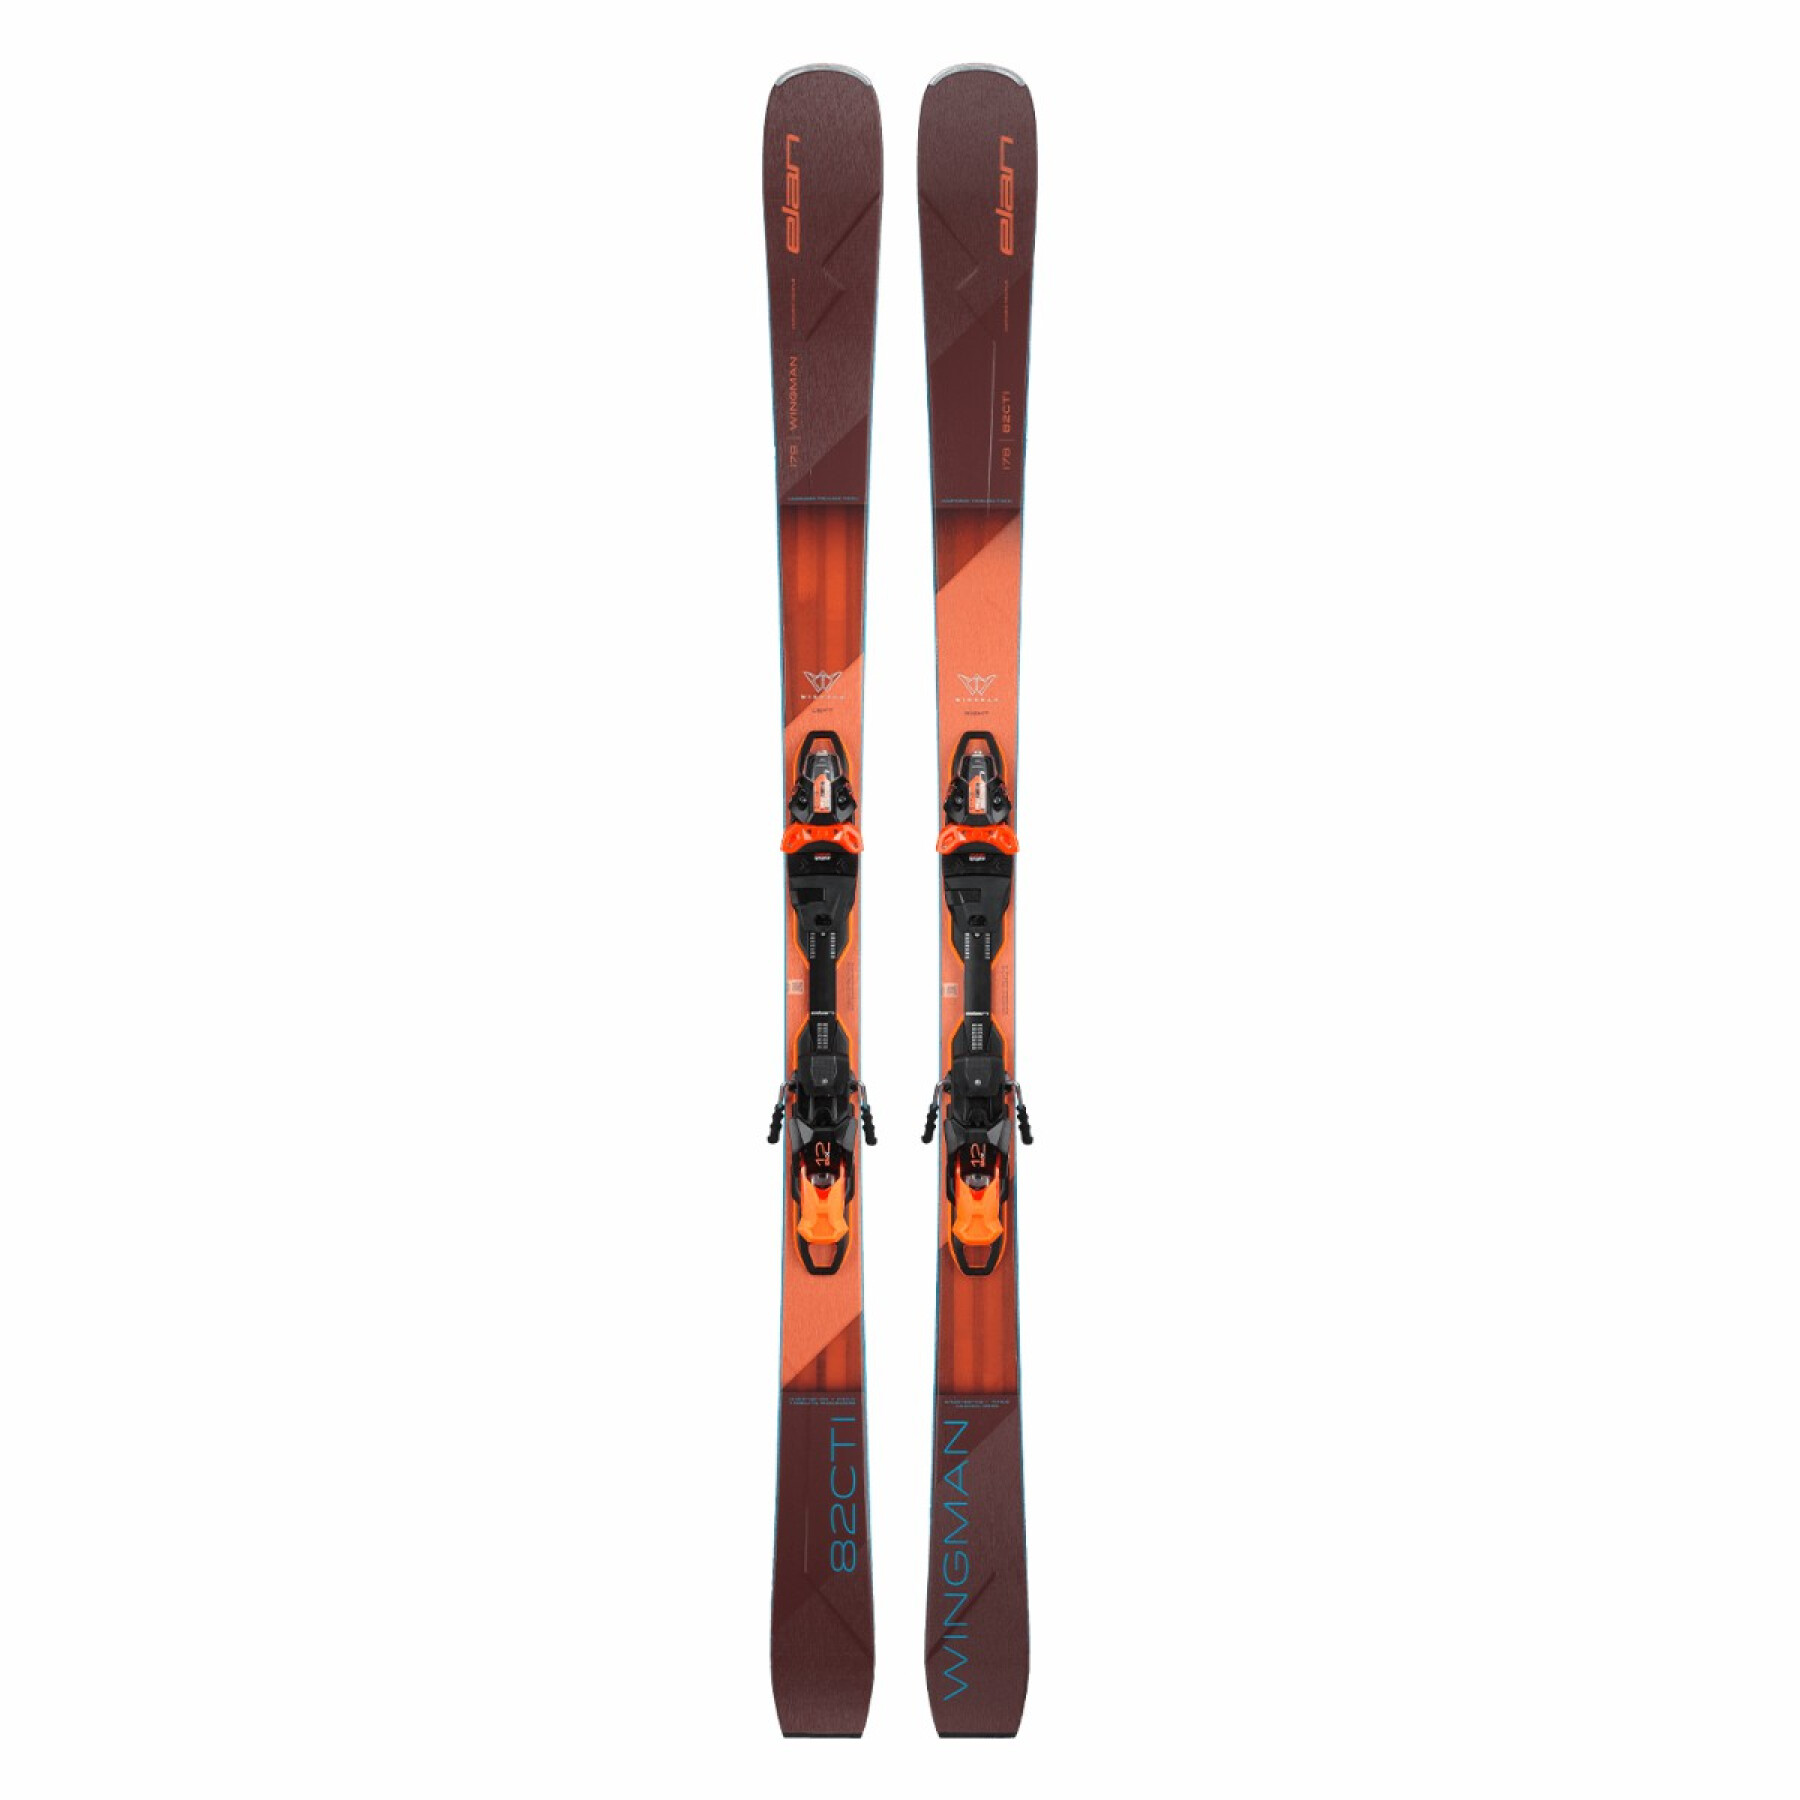 Wingman 82 cti fx emx 12.0 ski pack with bindings Elan